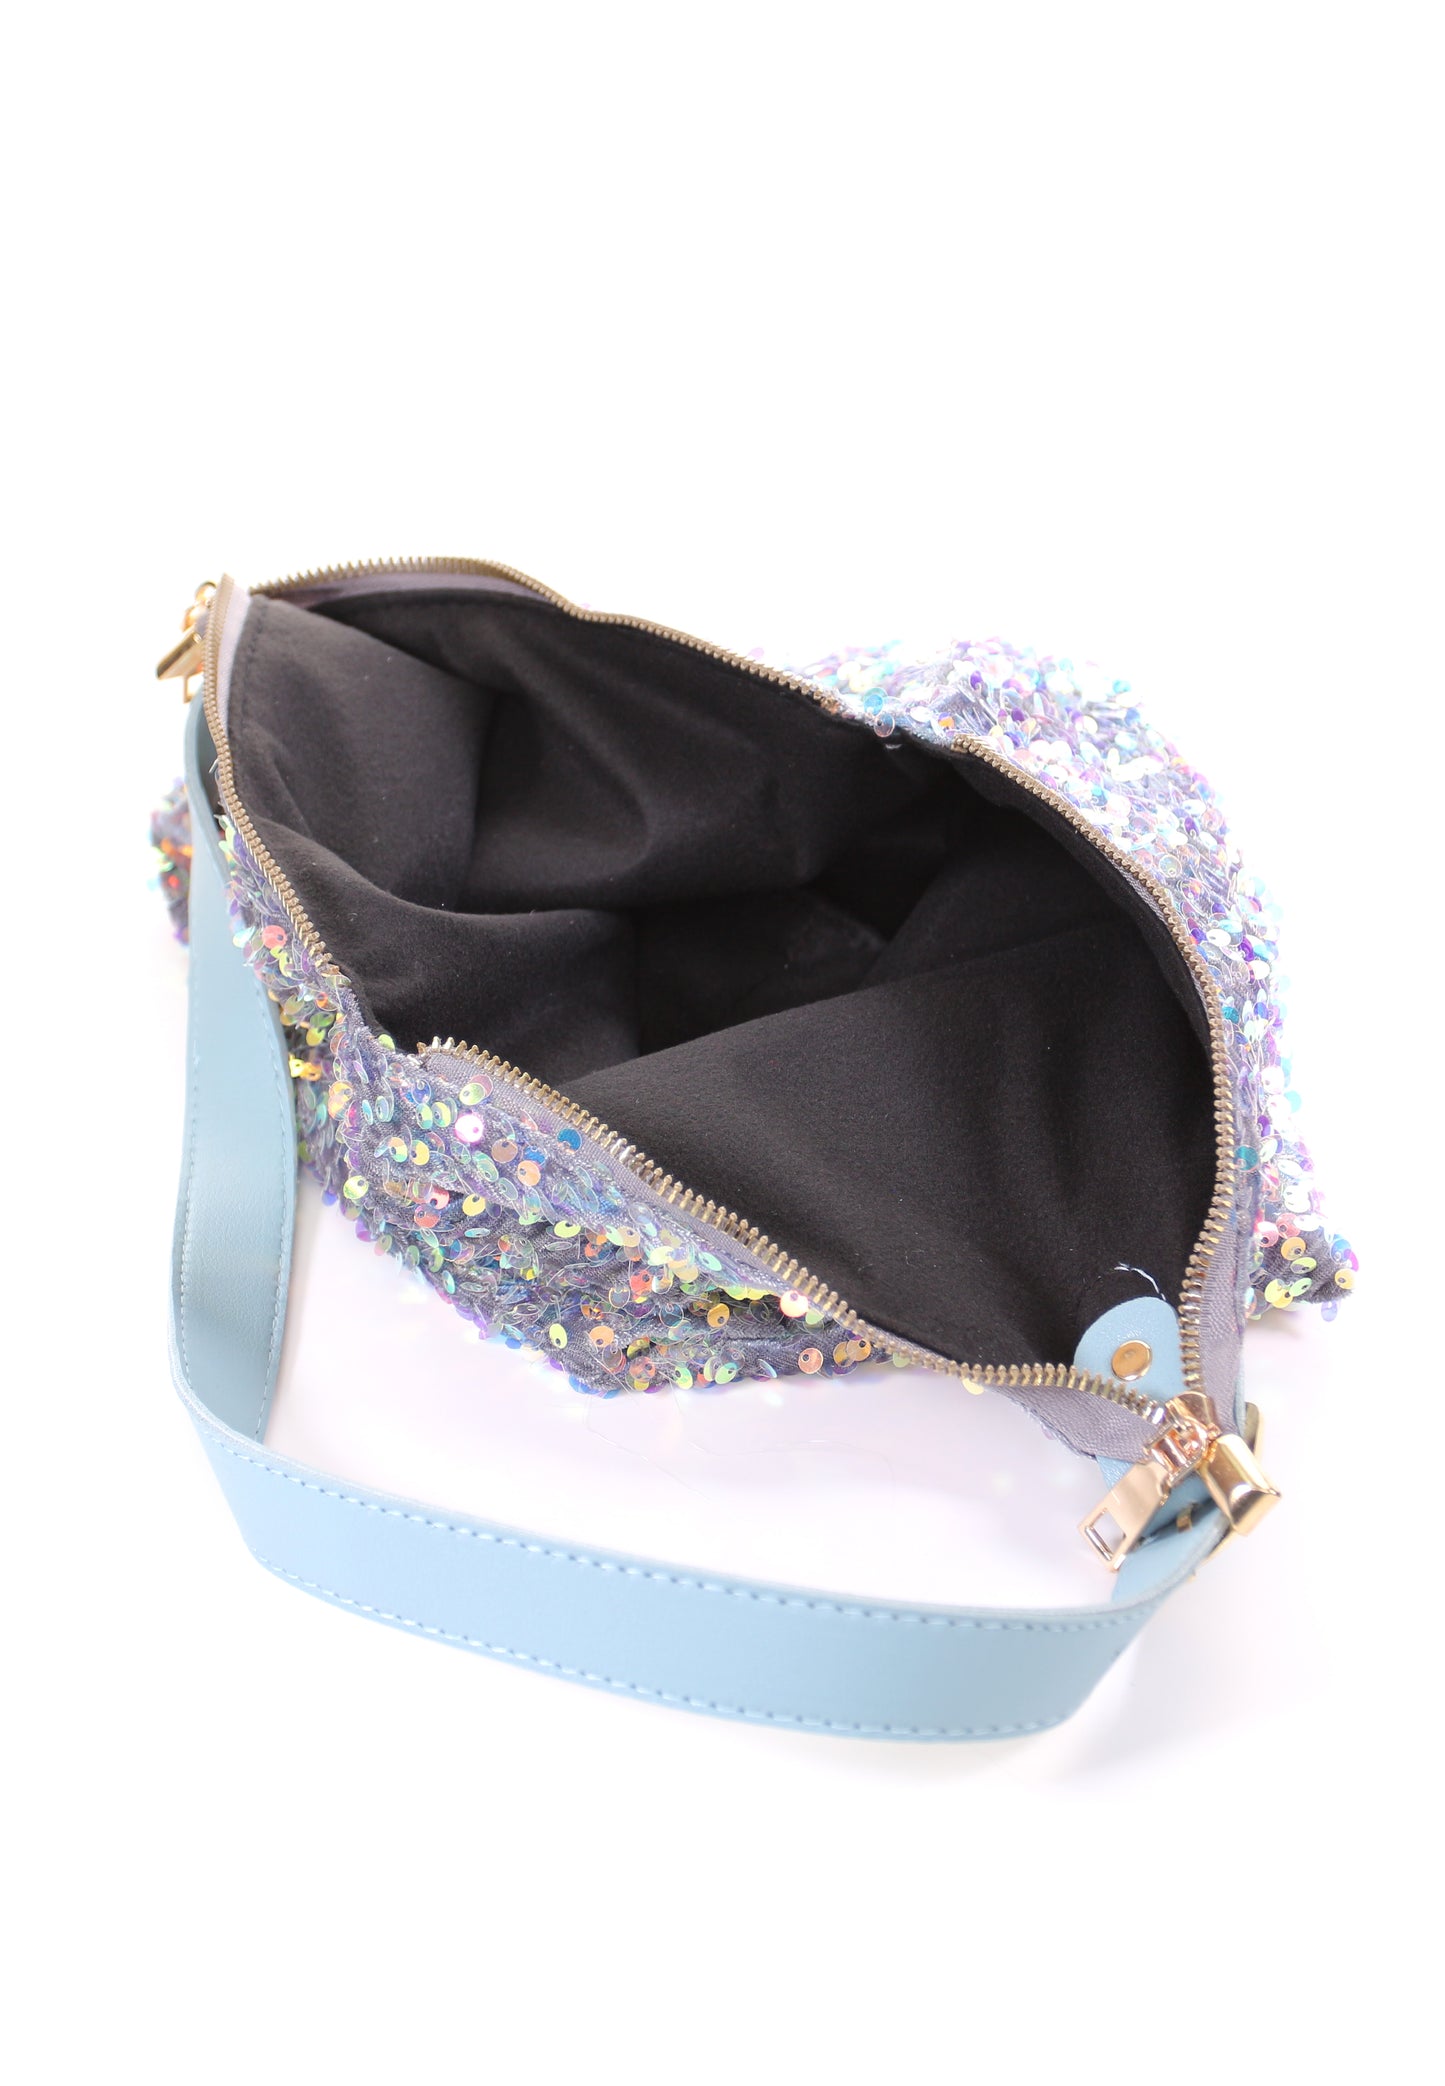 Sequin Fabric Handbags